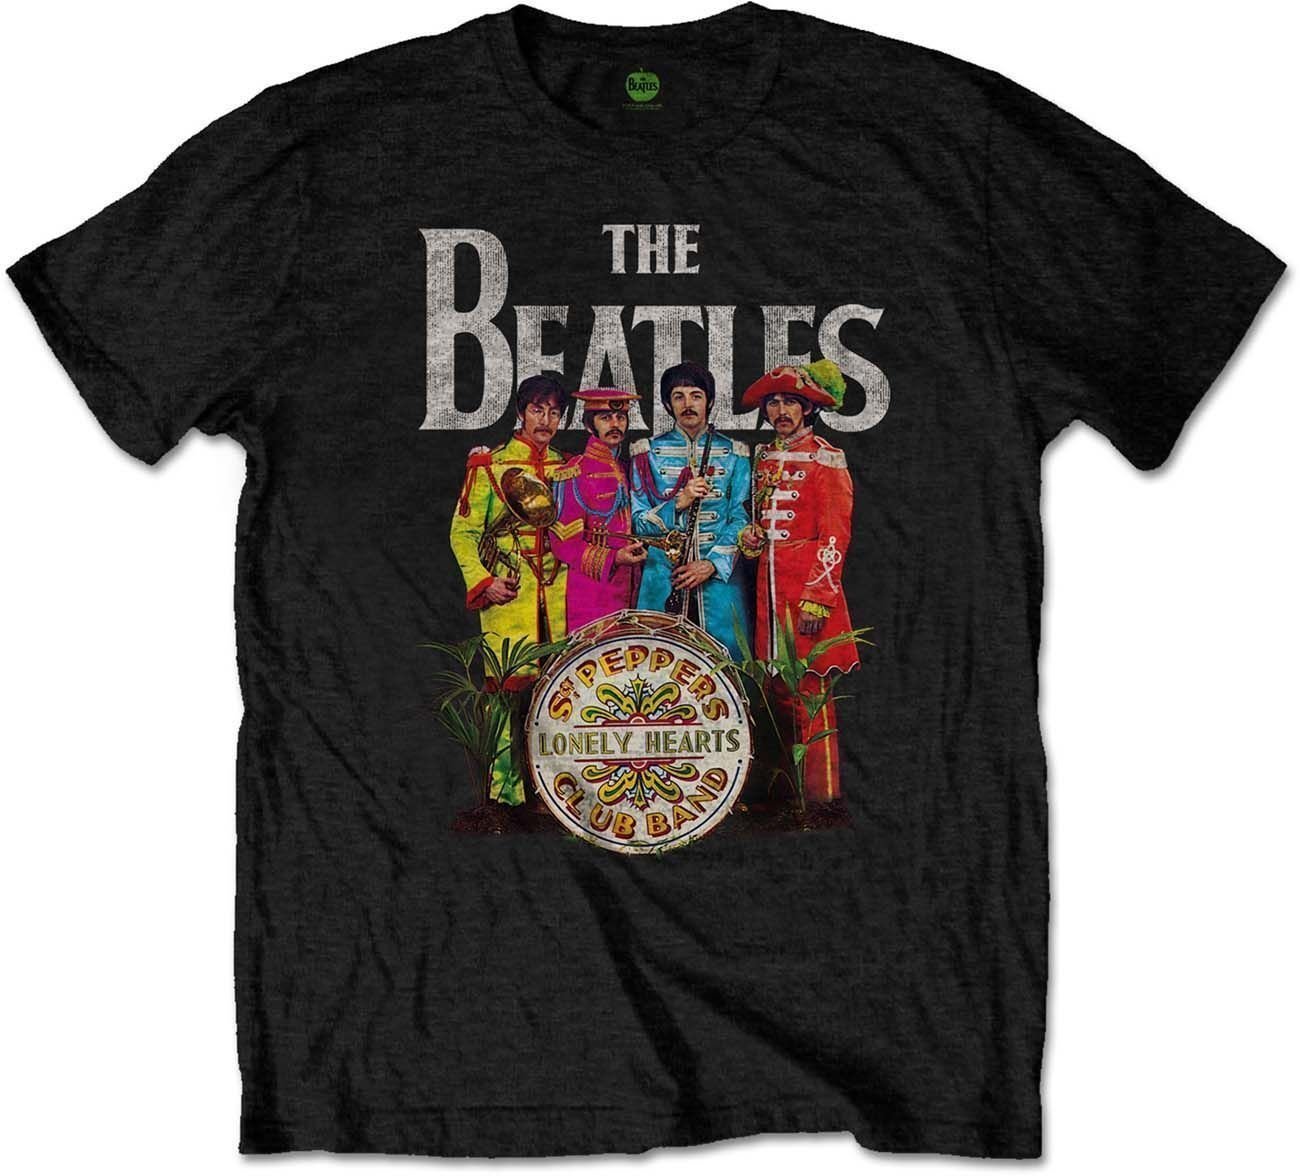 The Beatles T-shirt Unisex Sgt Pepper (Retail Pack) Black S unisex